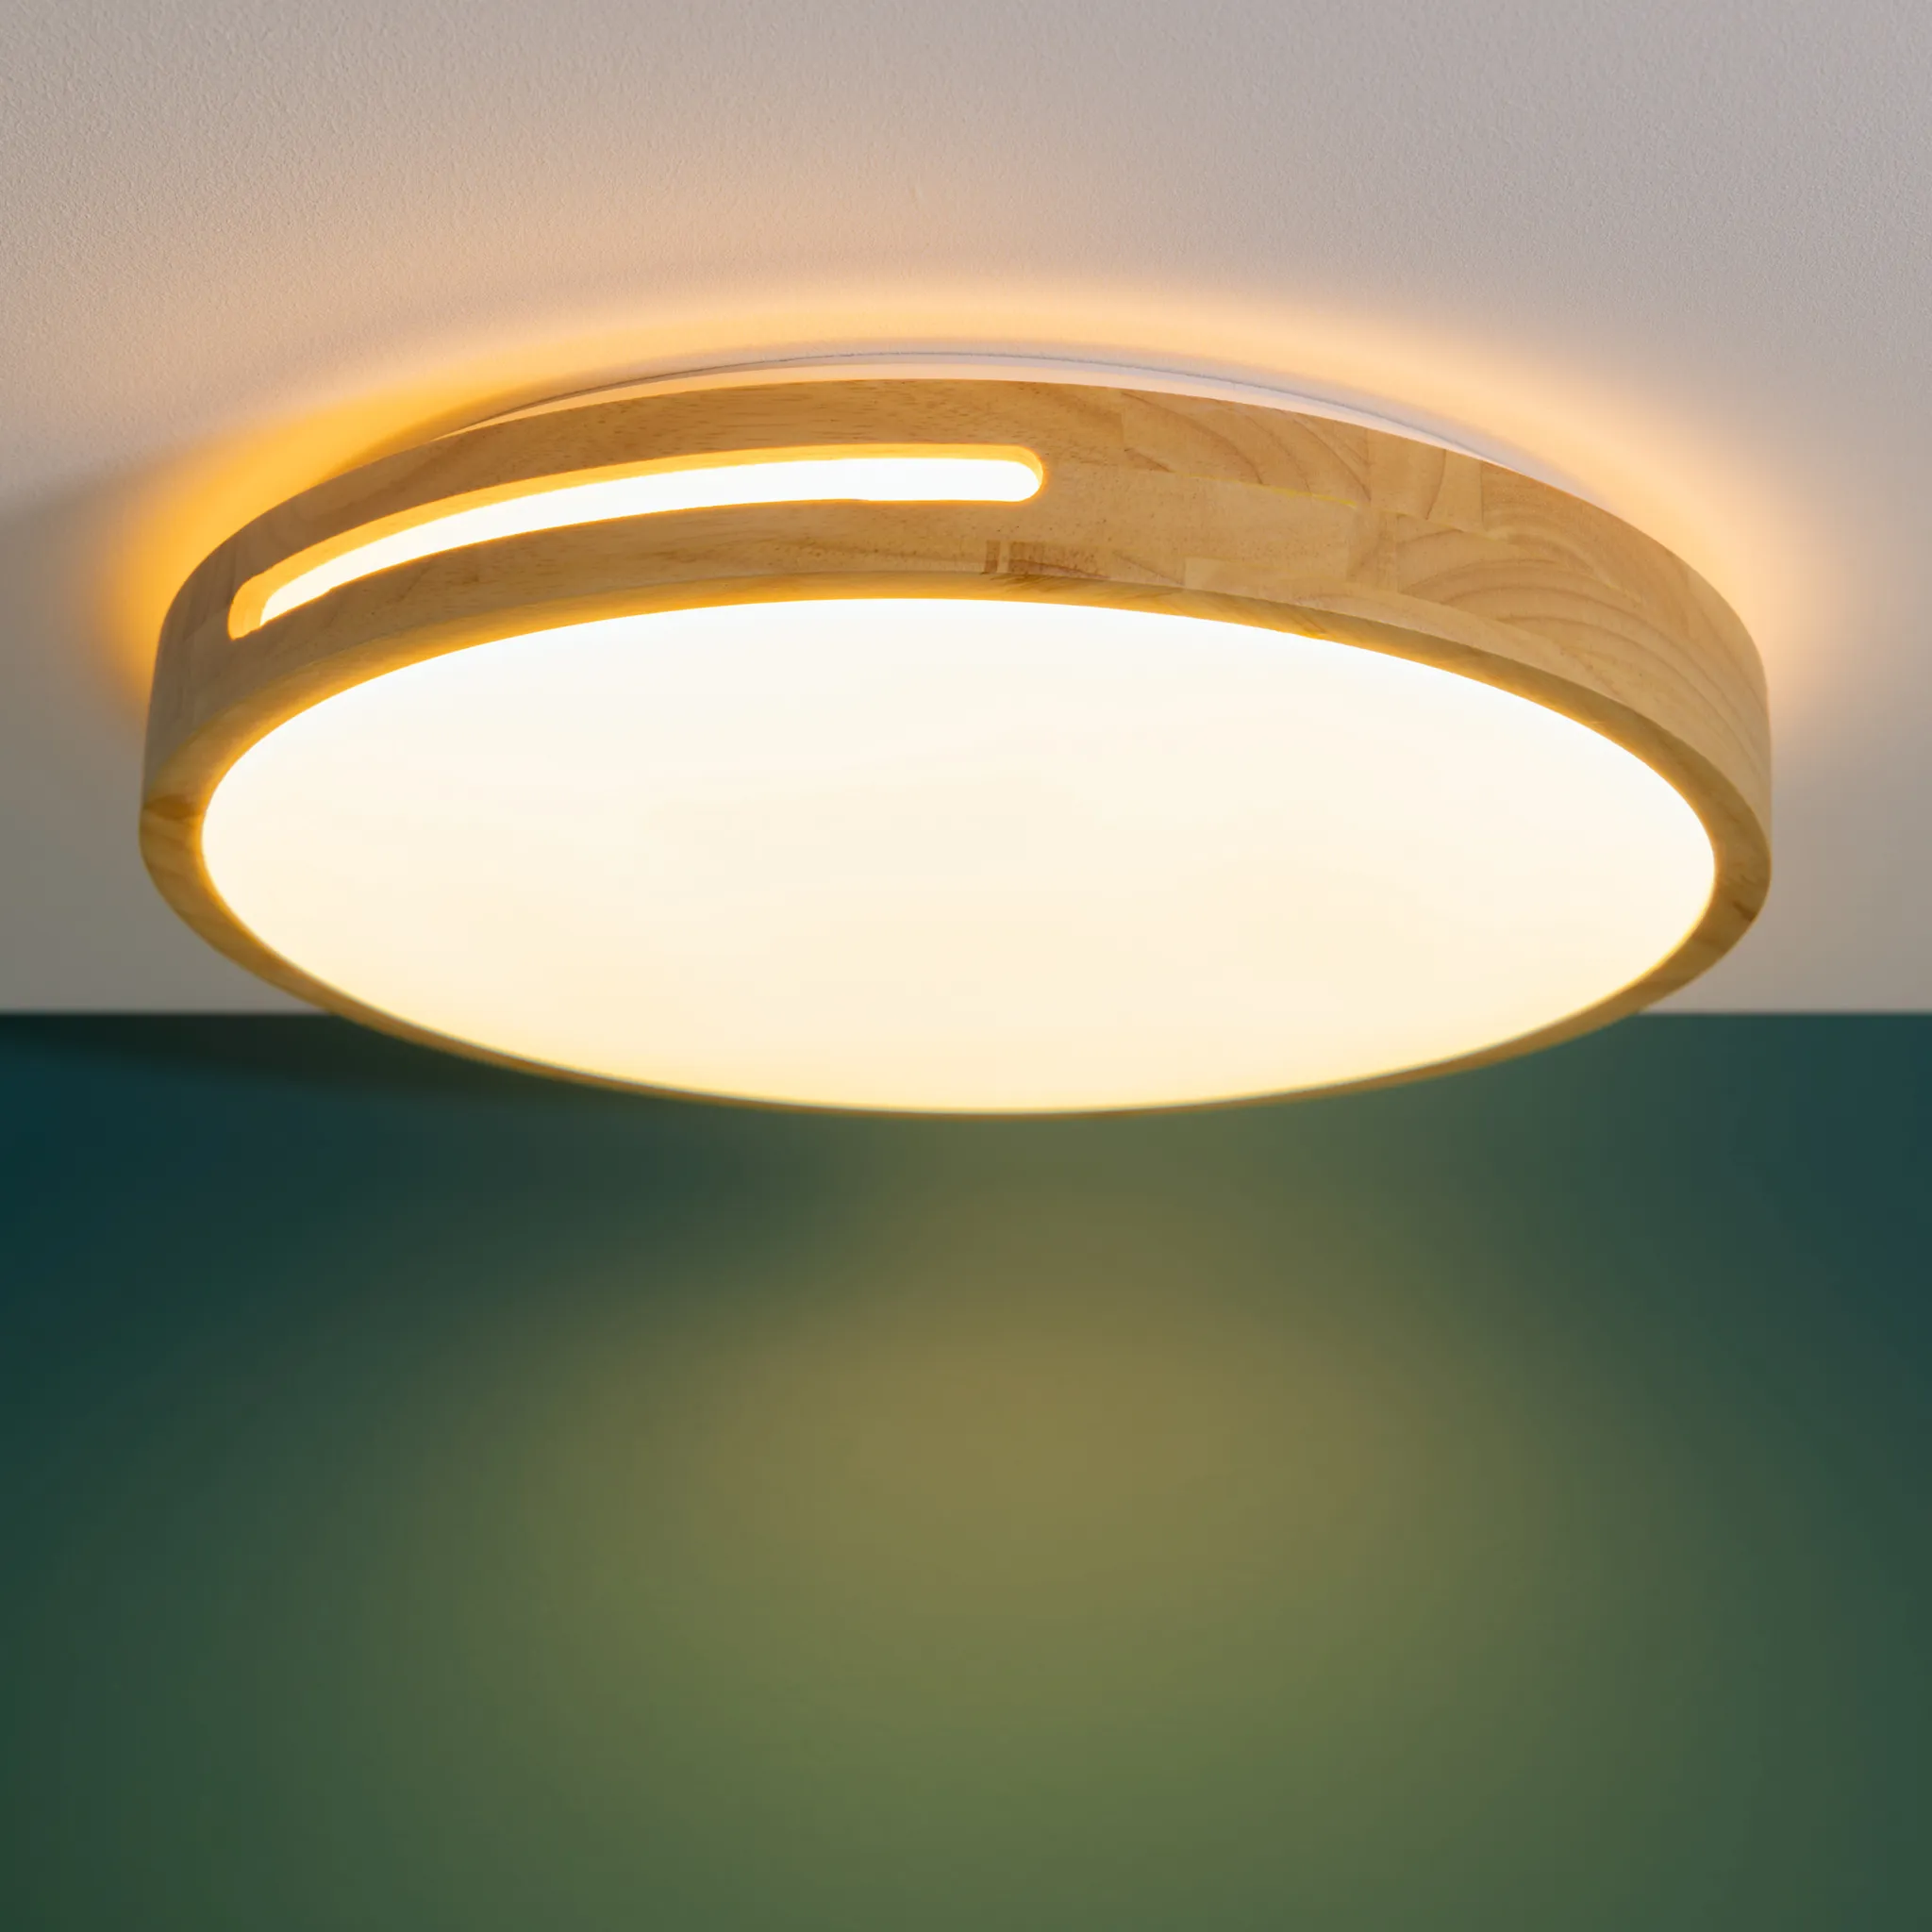 LED moderne mit 39cm Deckenlampe dimmbare